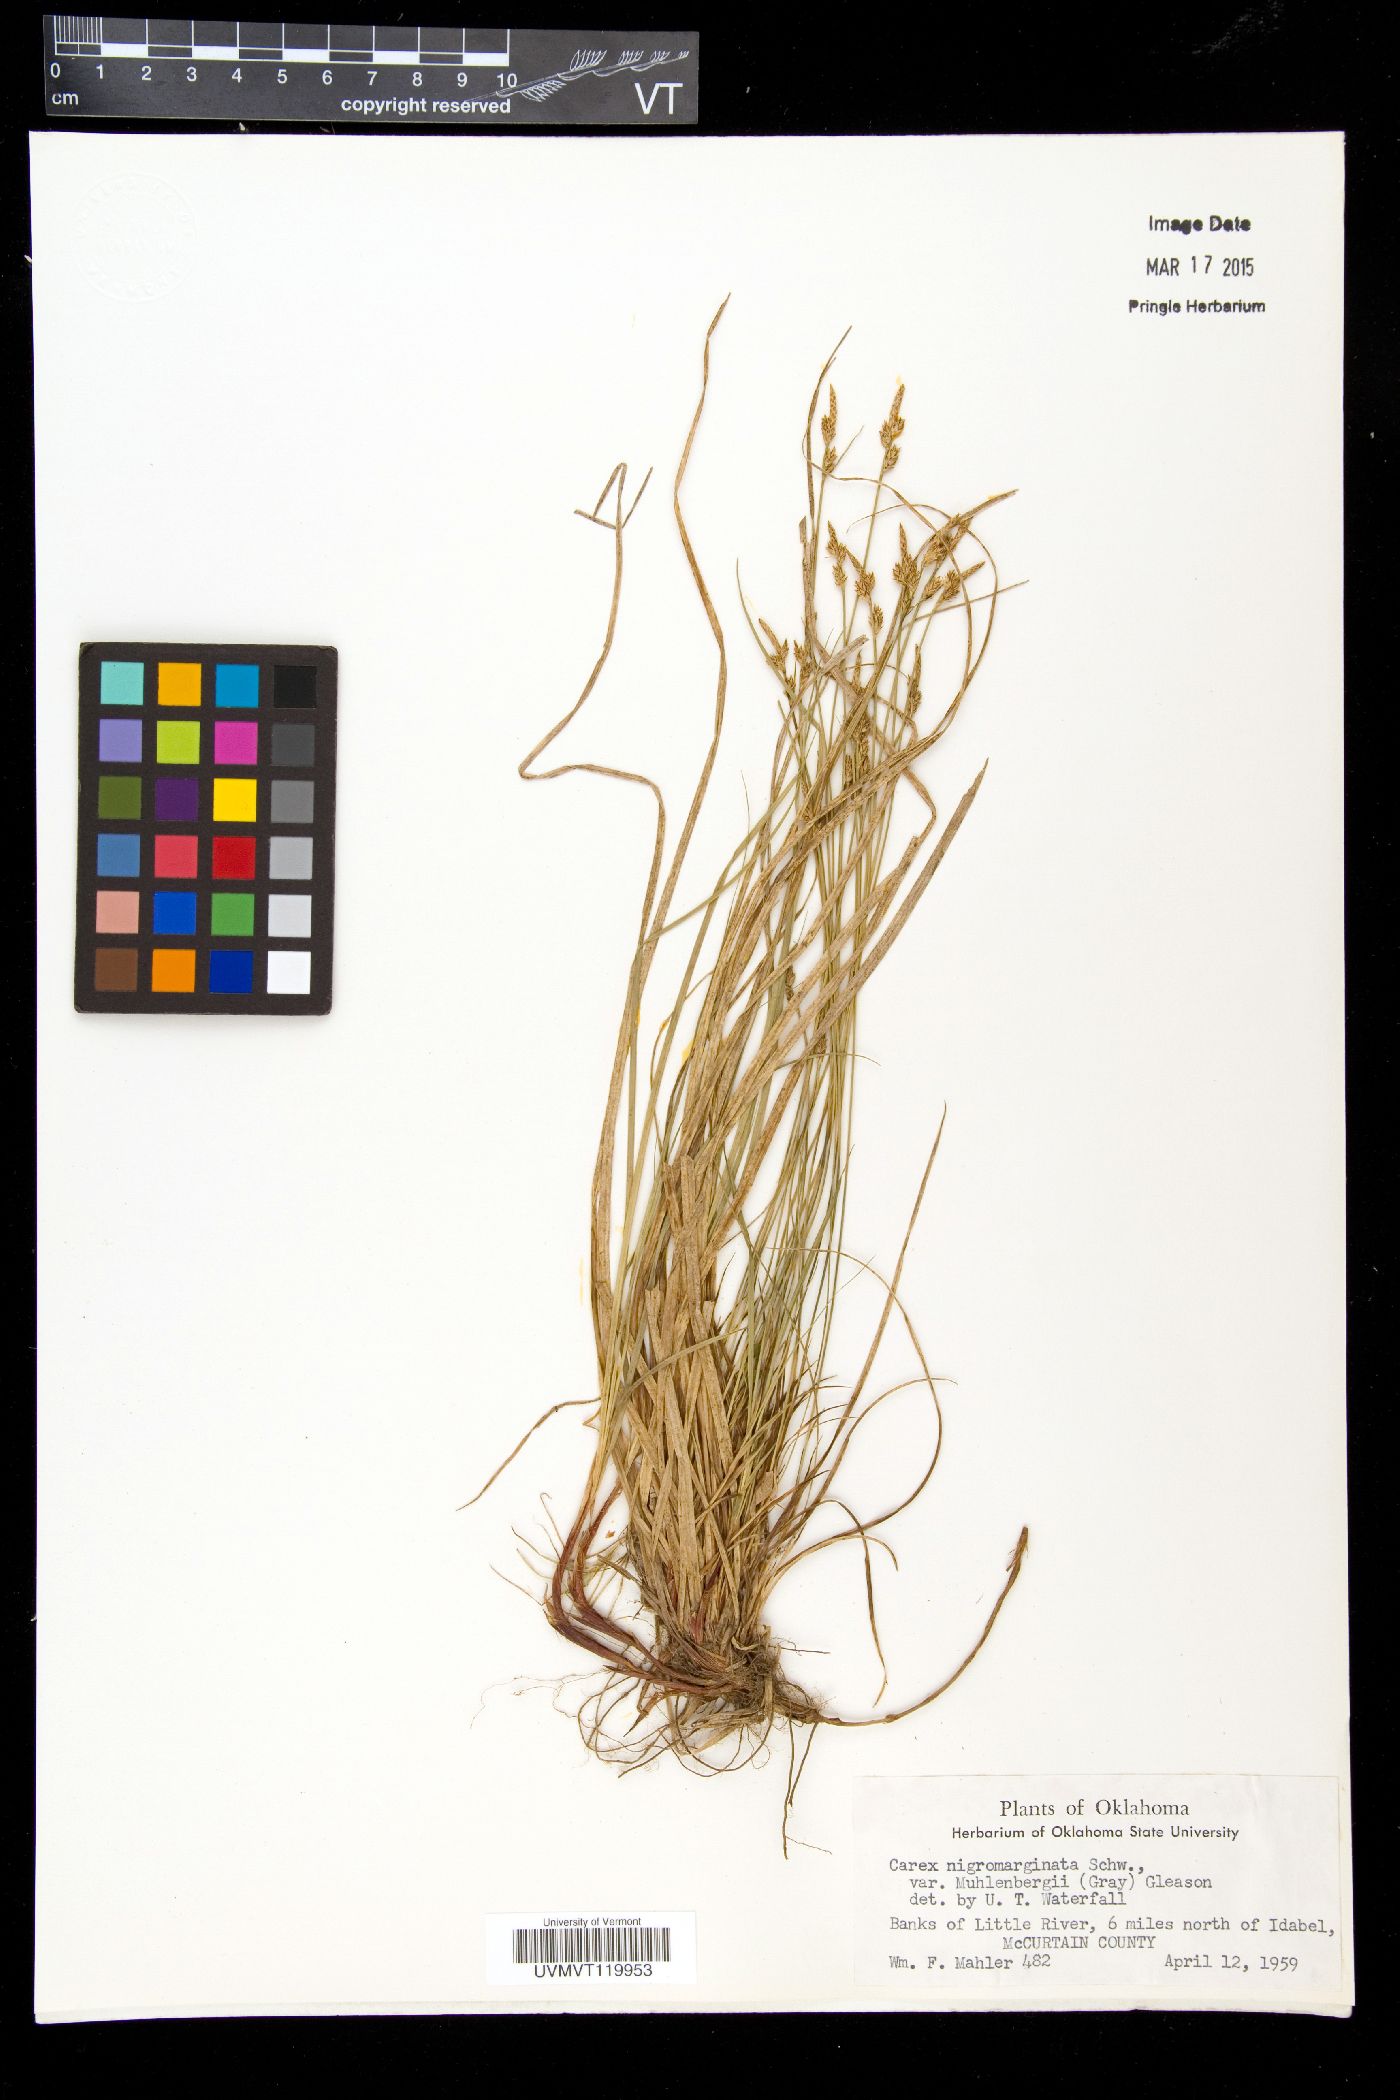 Carex nigromarginata var. muehlenbergii image